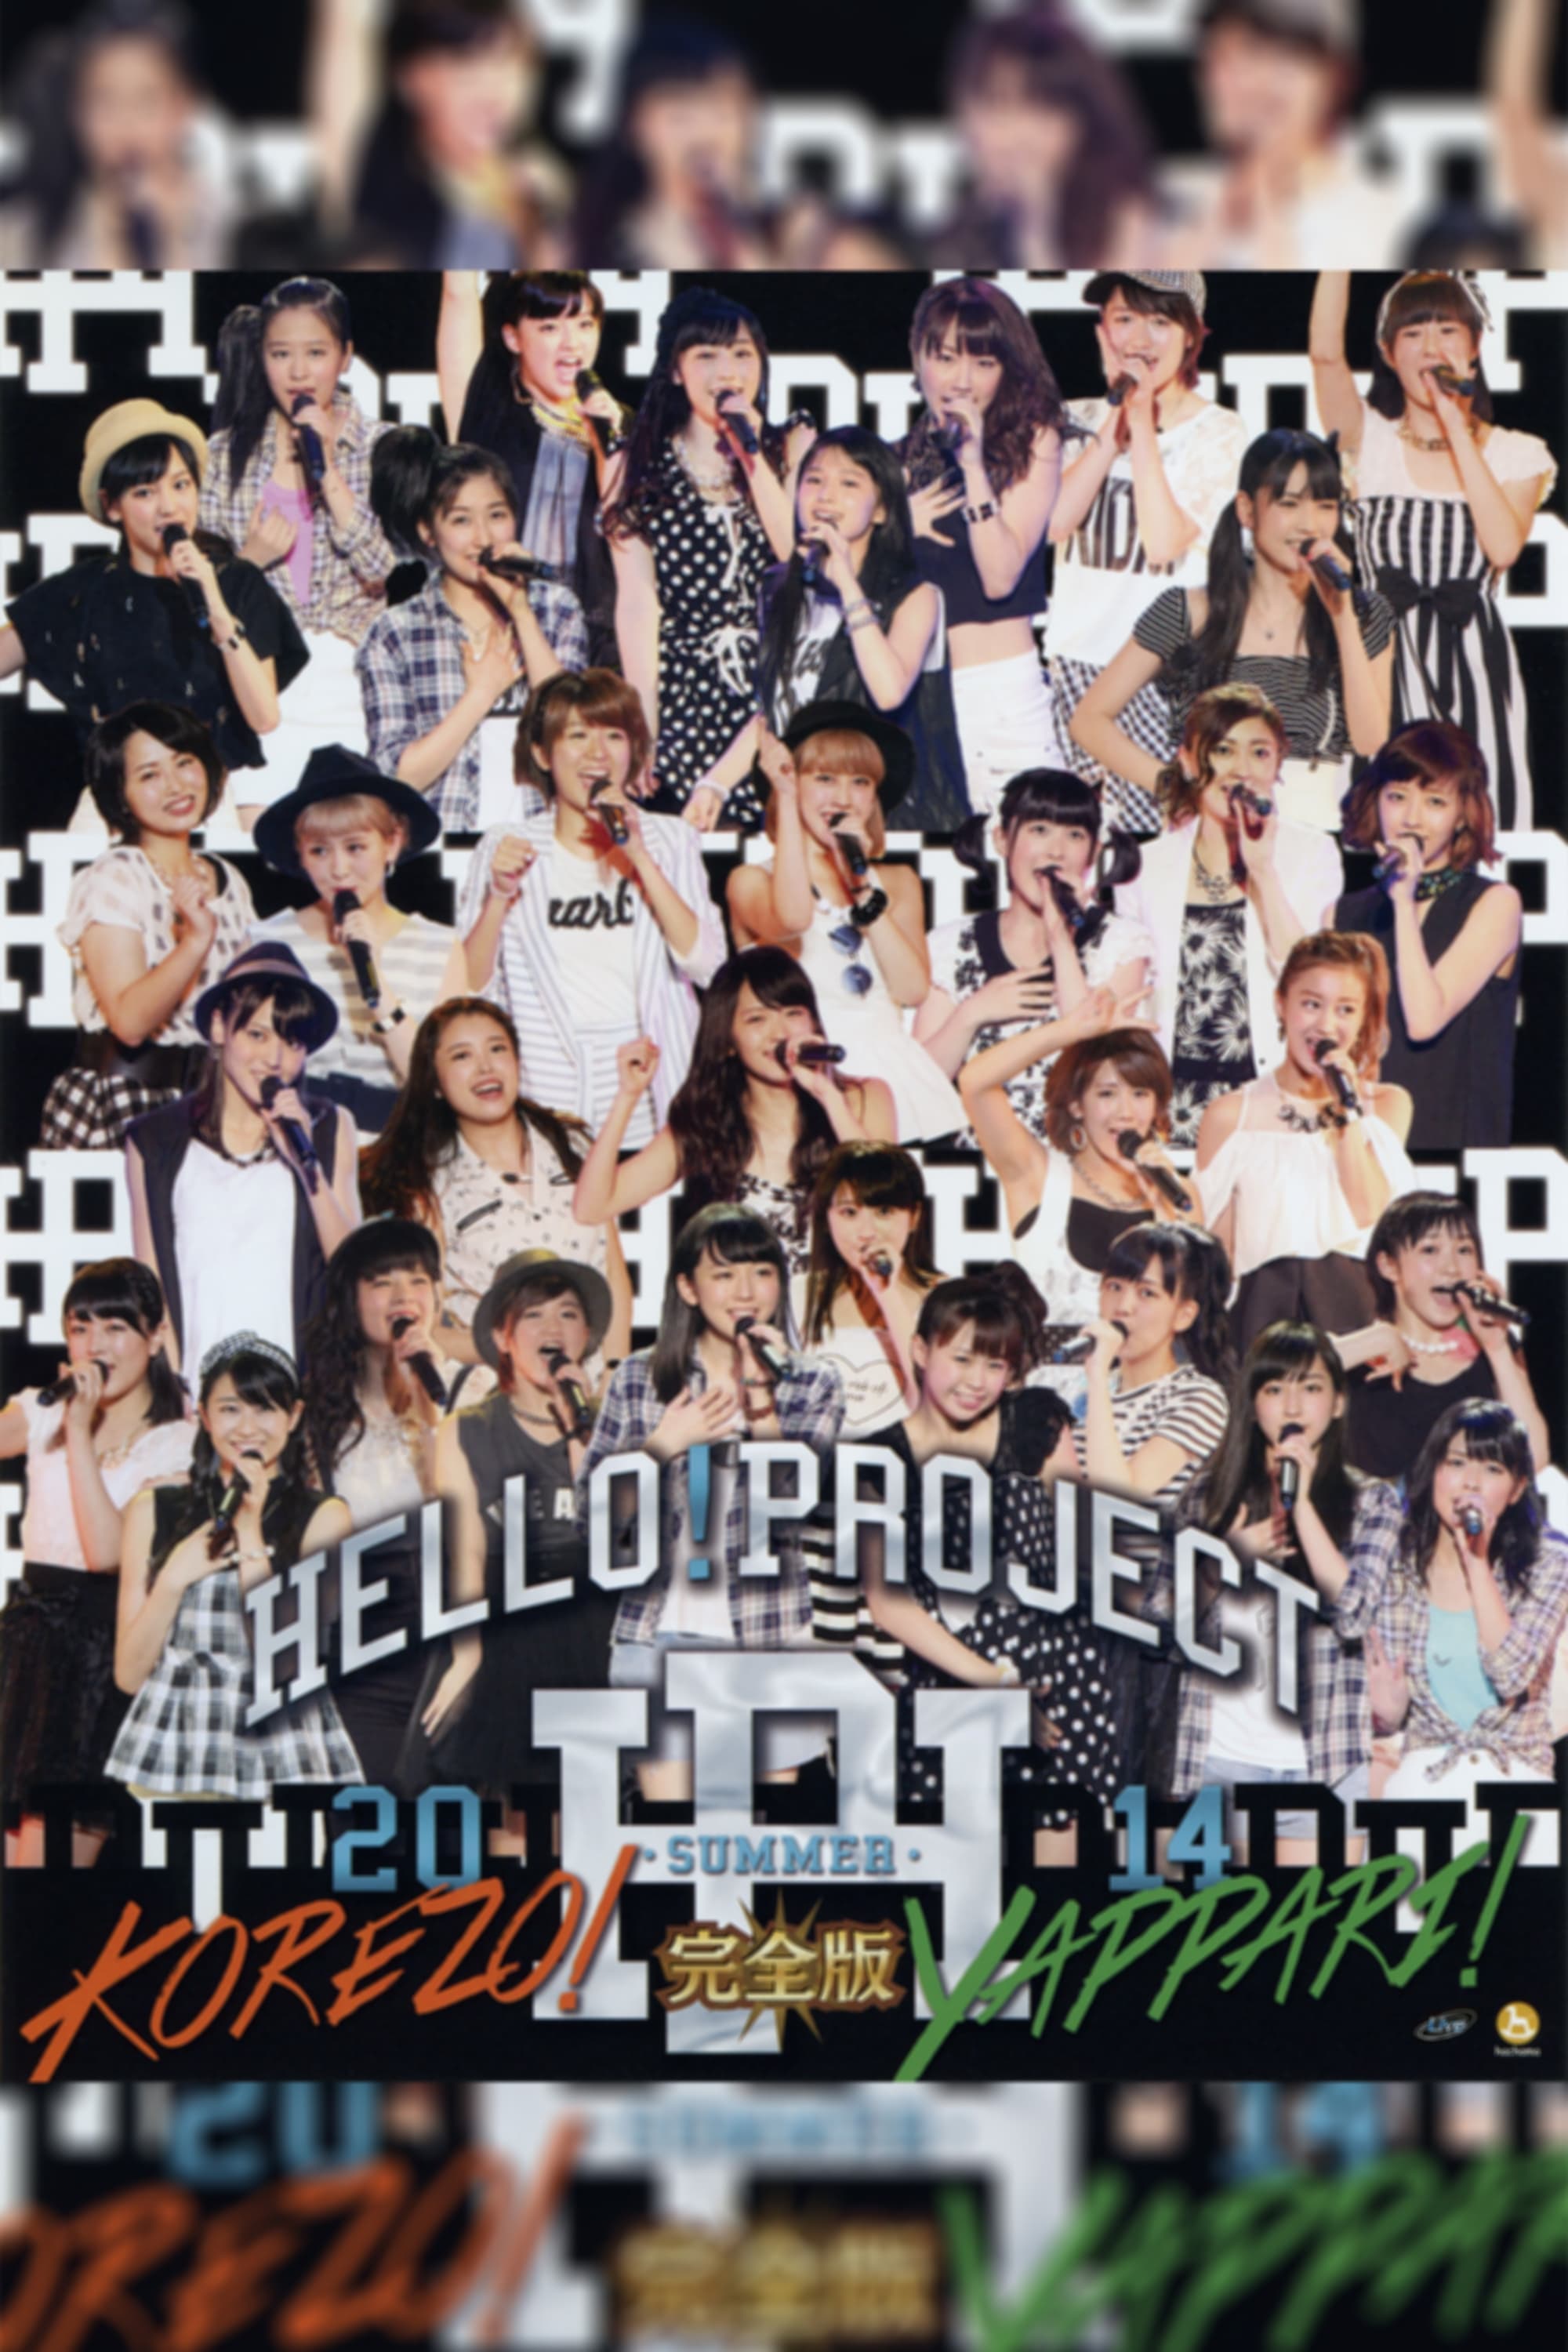 Hello! Project 2014 Summer ~KOREZO!~